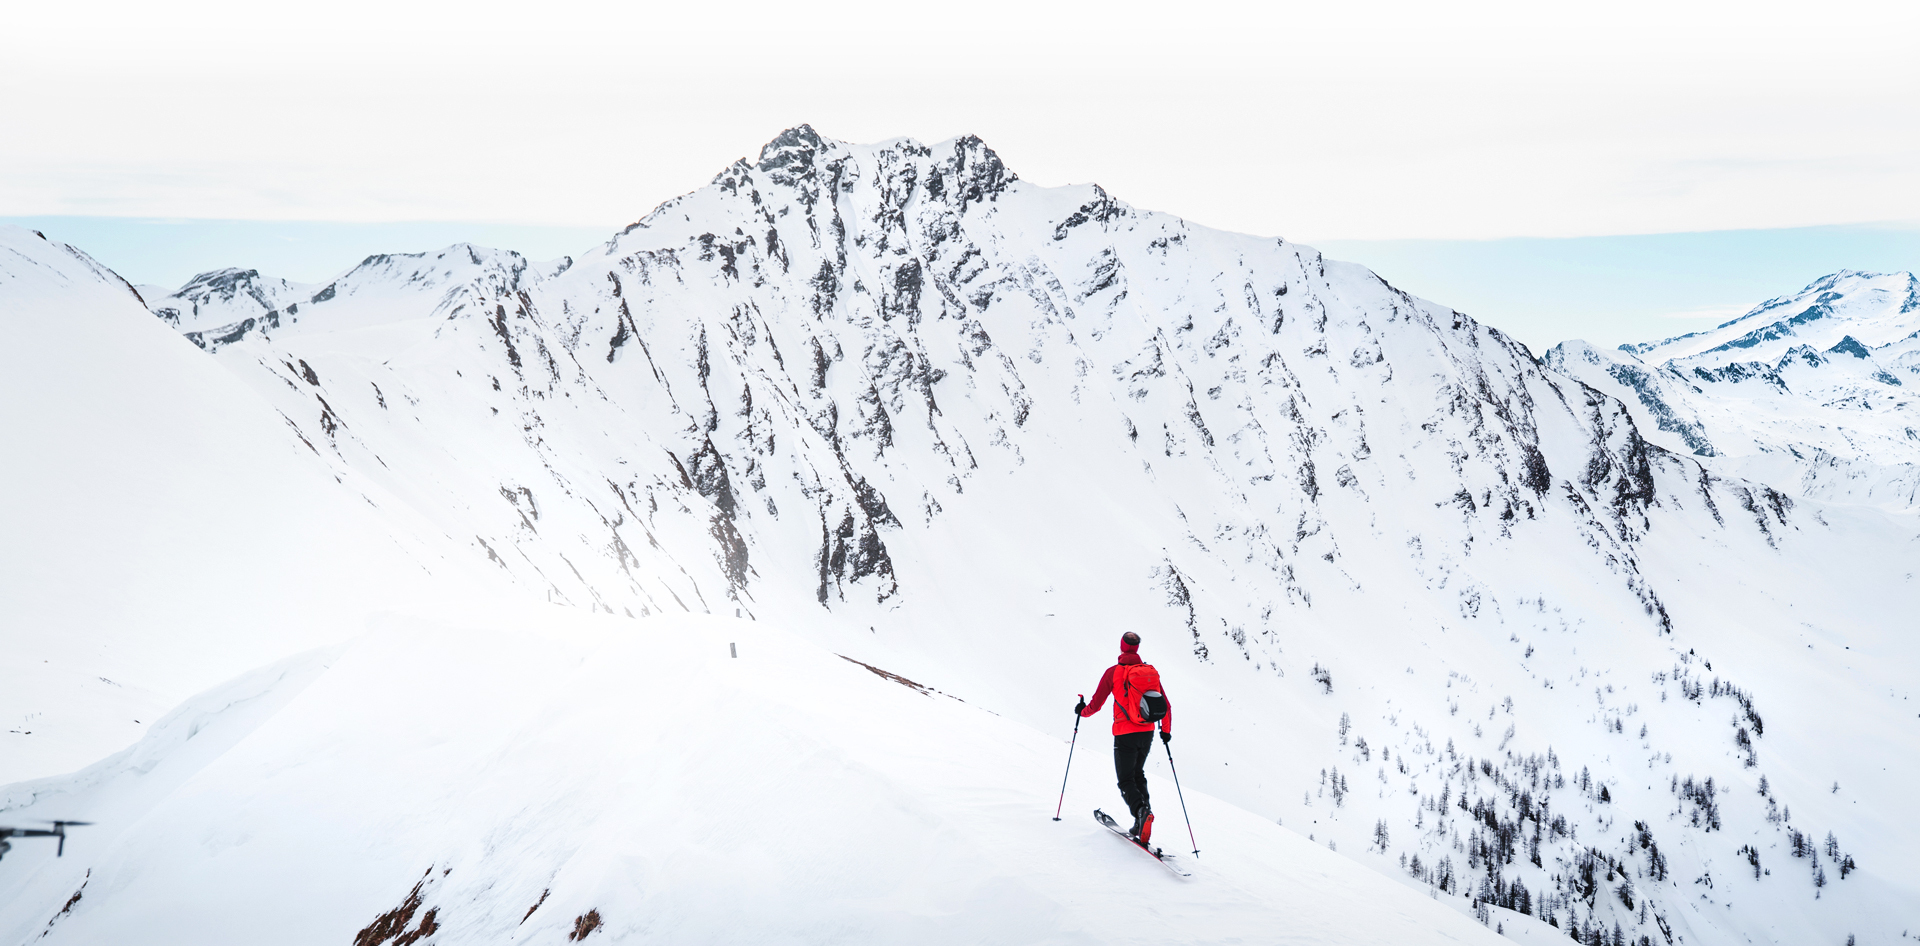 Osoba na nartach w ośnieżonych górach